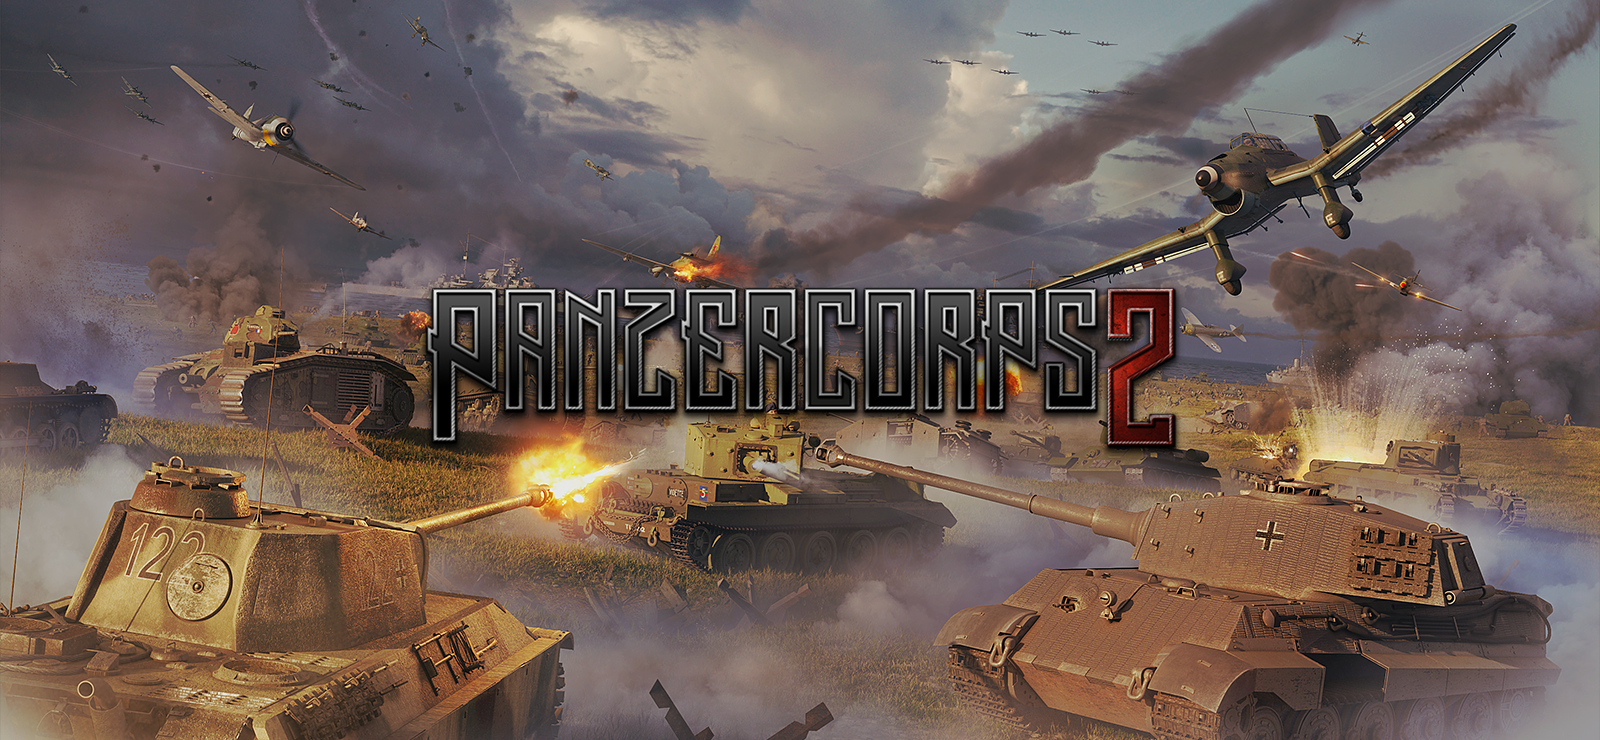 Panzer Corps 2